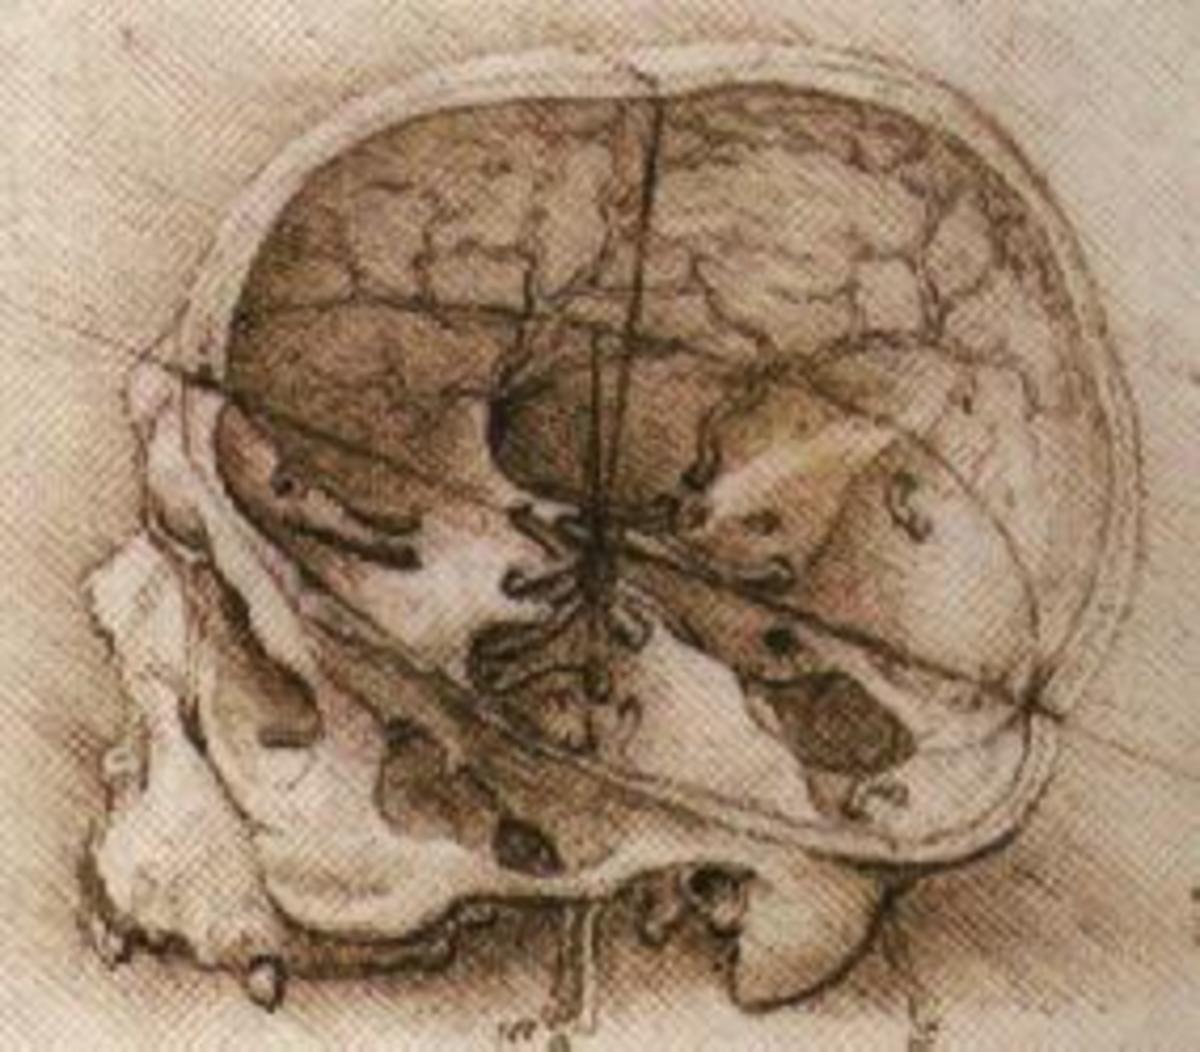 The Anatomy and Physiology Works of Leonardo da Vinci | HubPages